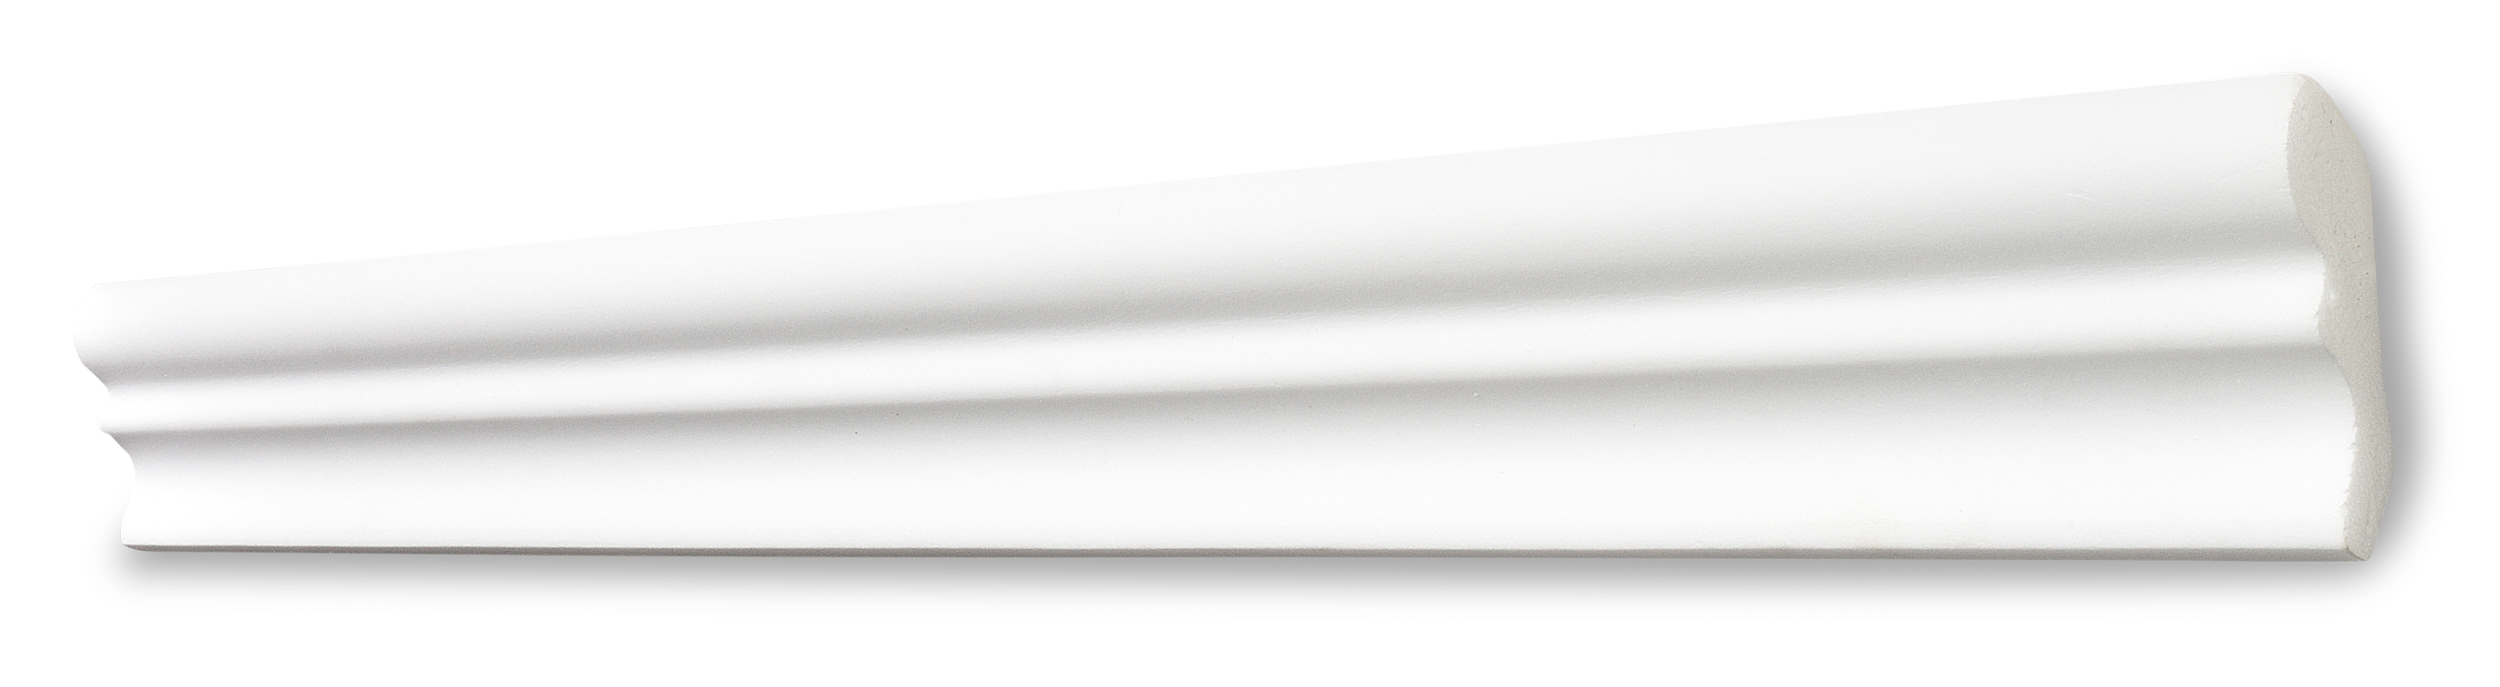 DECOSA Moulure D50 - polystyrène - blanc - 40 x 50 mm - longueur 2 m